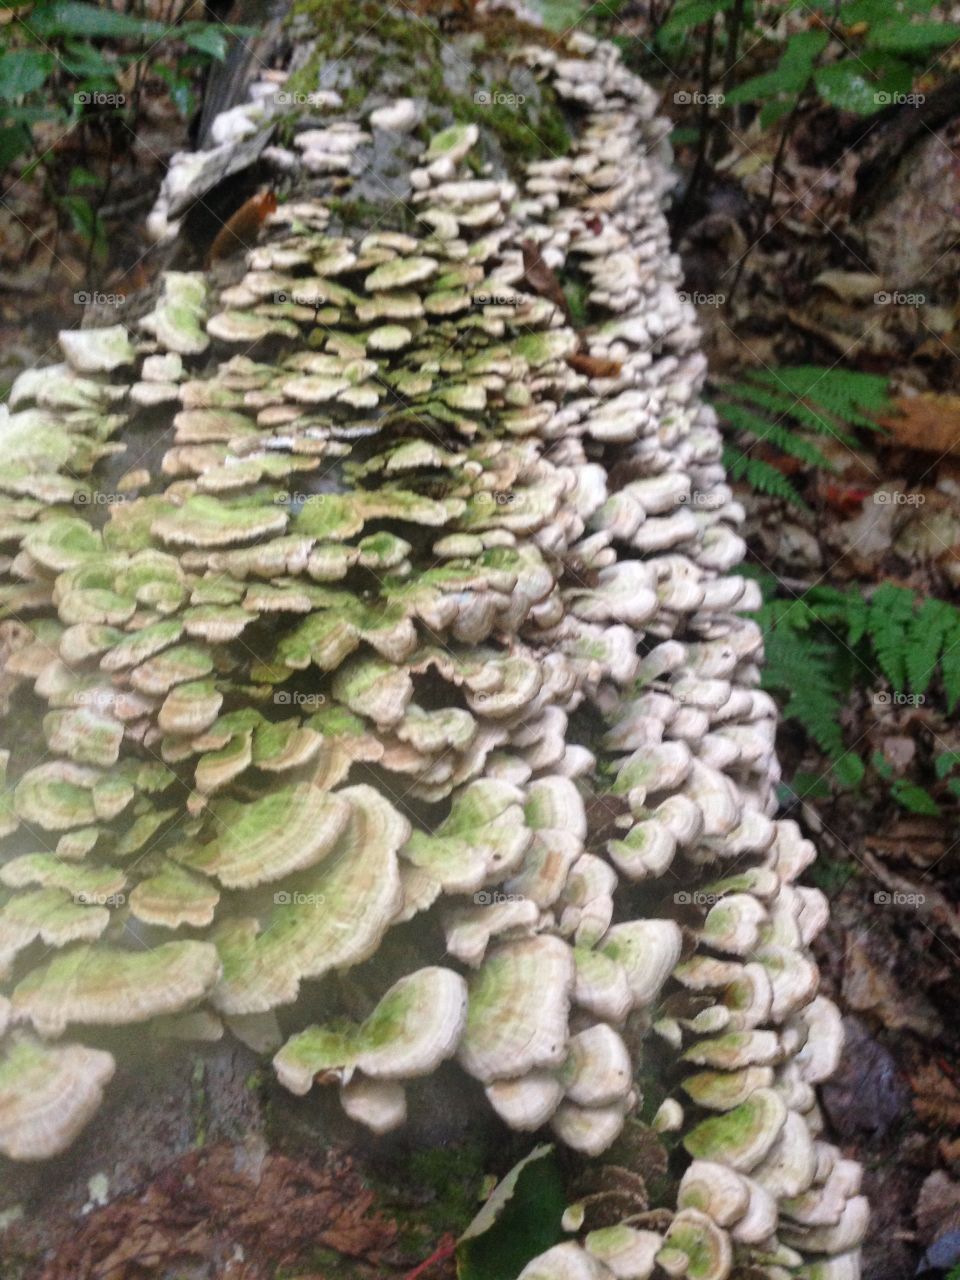 Many mushrooms or a flood of fungi